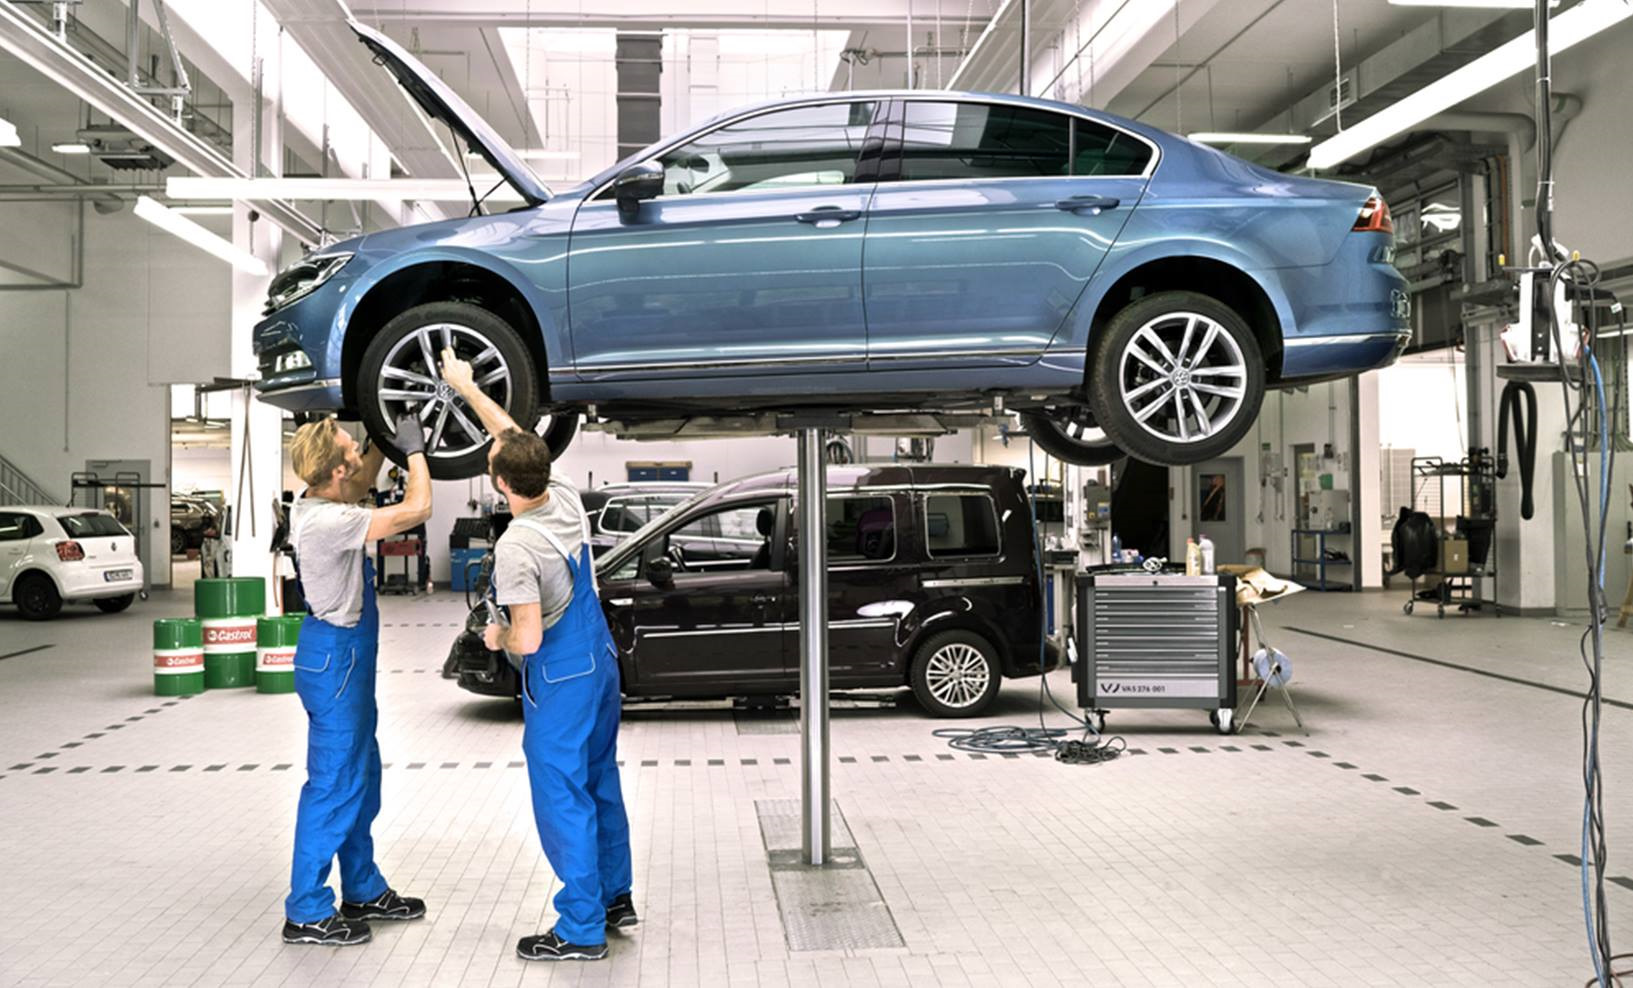 A image of Volkswagen servicing